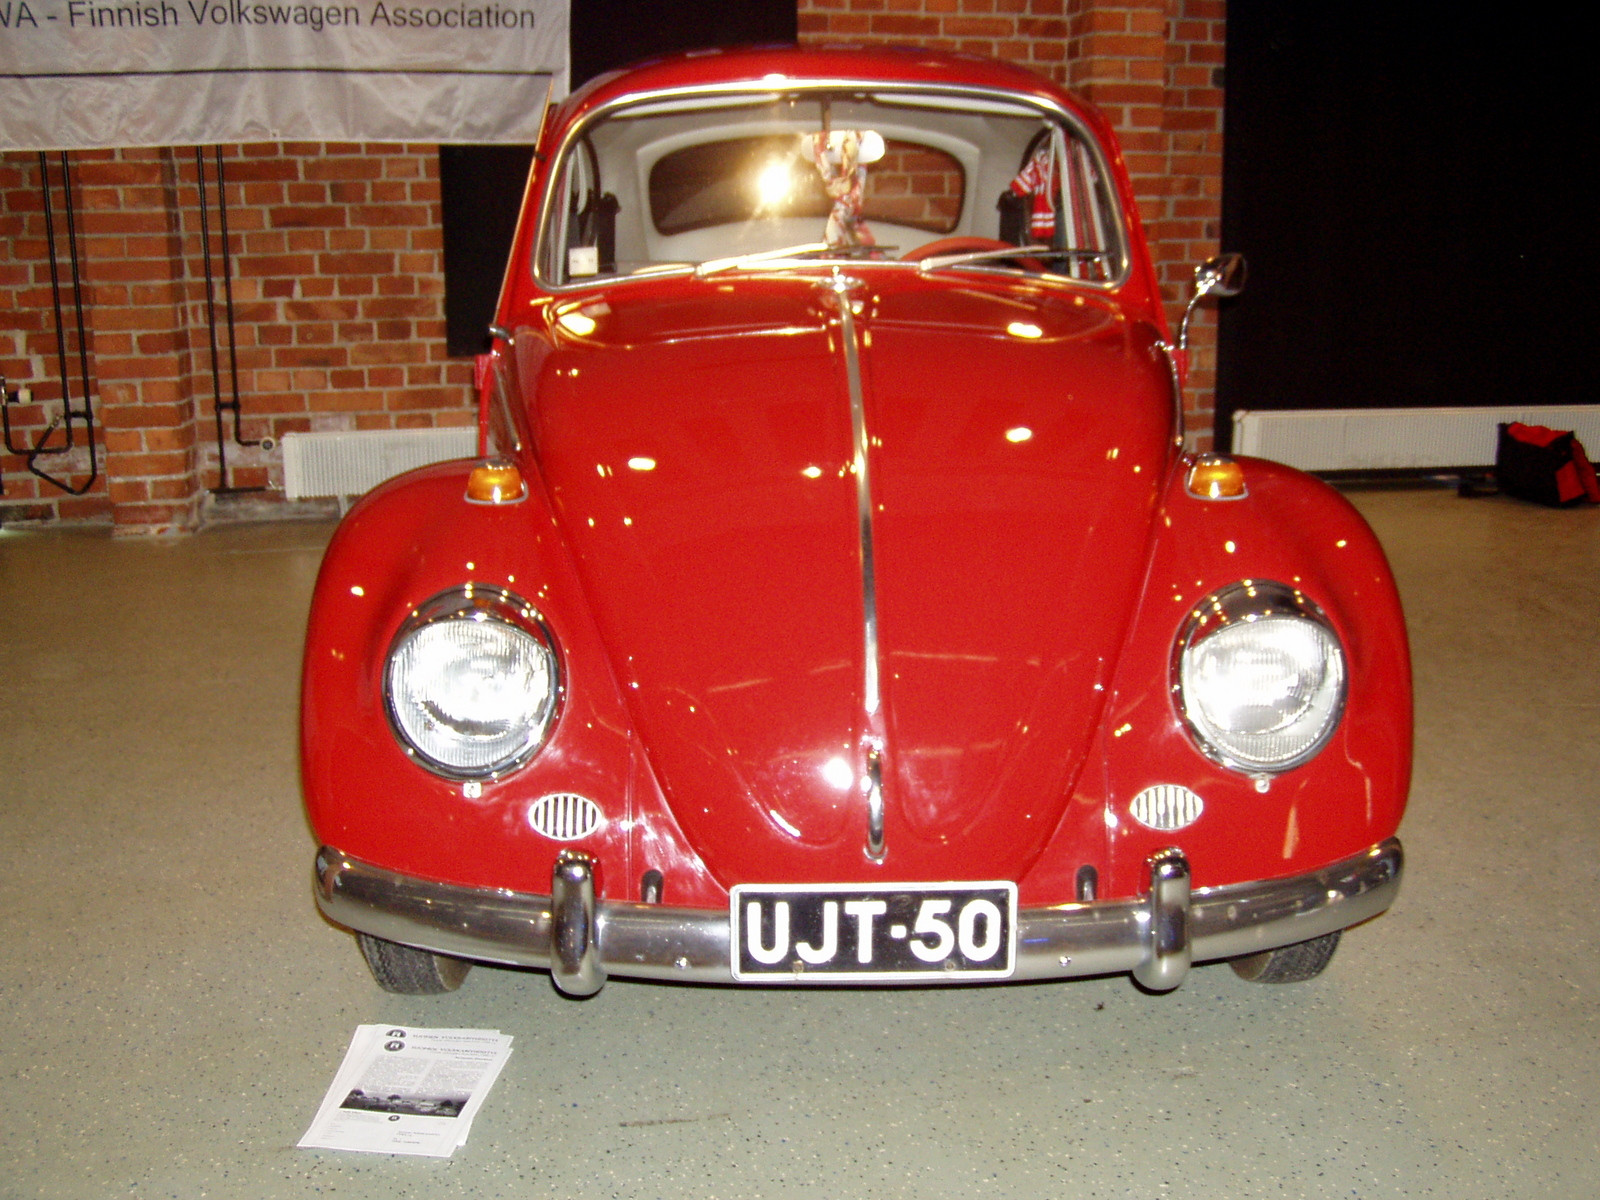 Eurocar Show 2005, Punainen VW Kupla